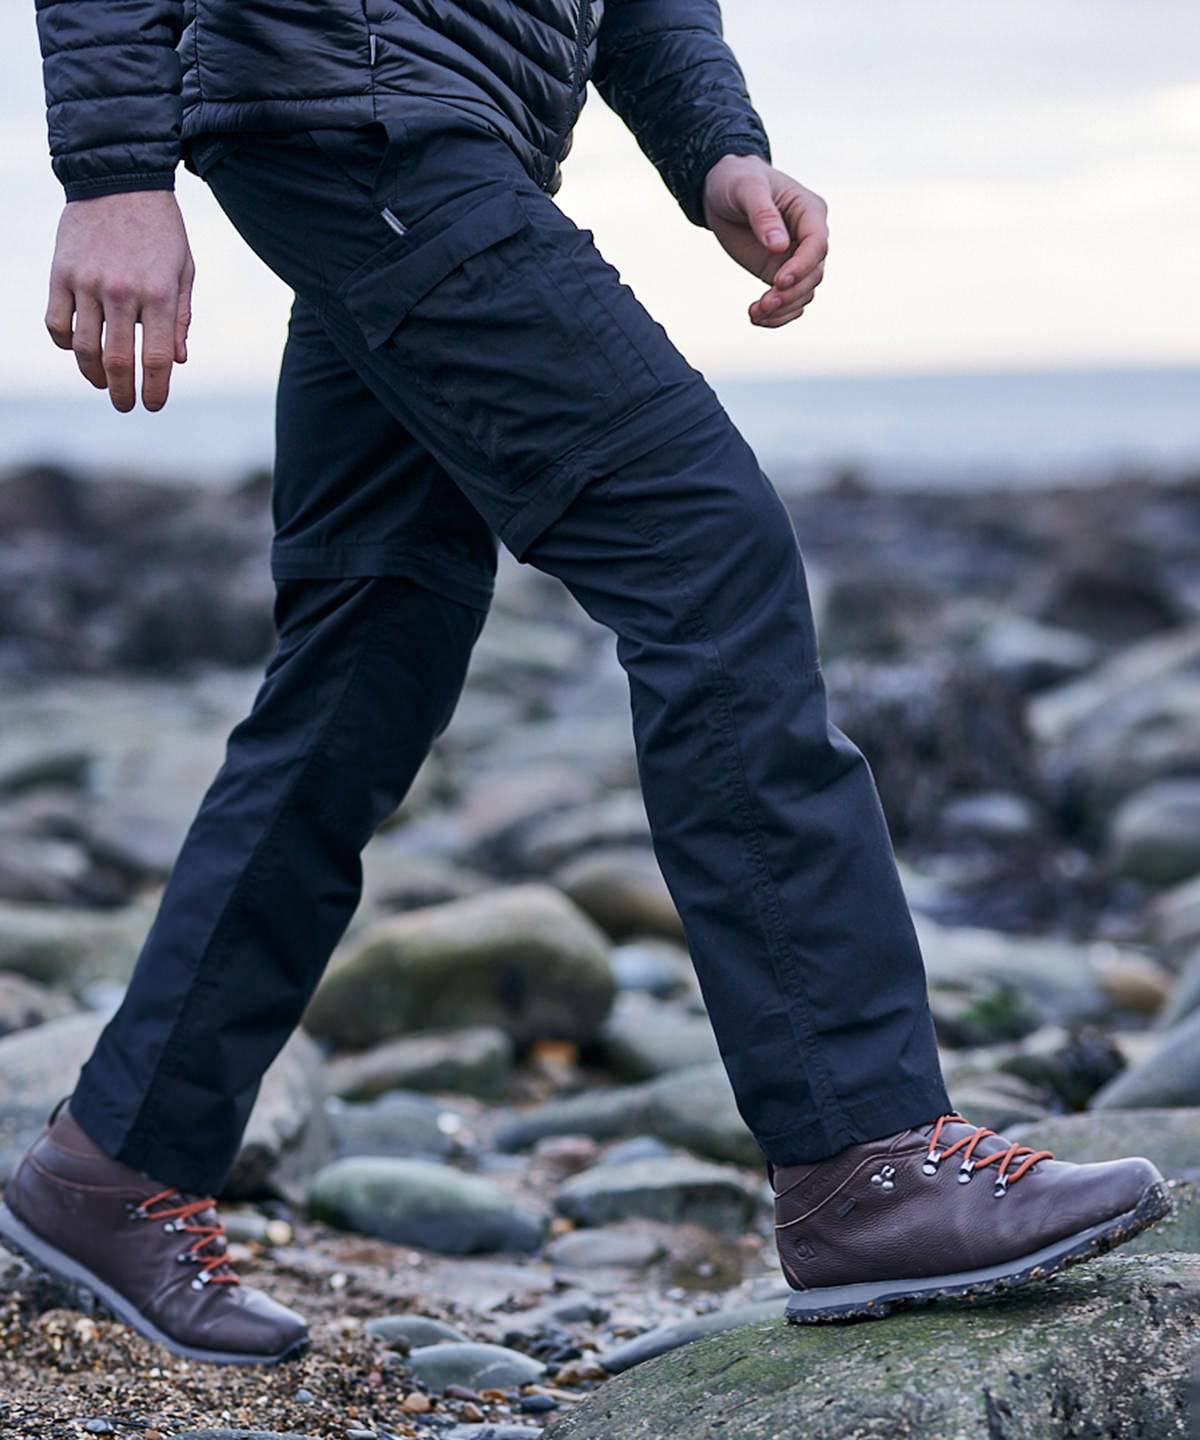 Black - Expert Kiwi tailored convertible trousers